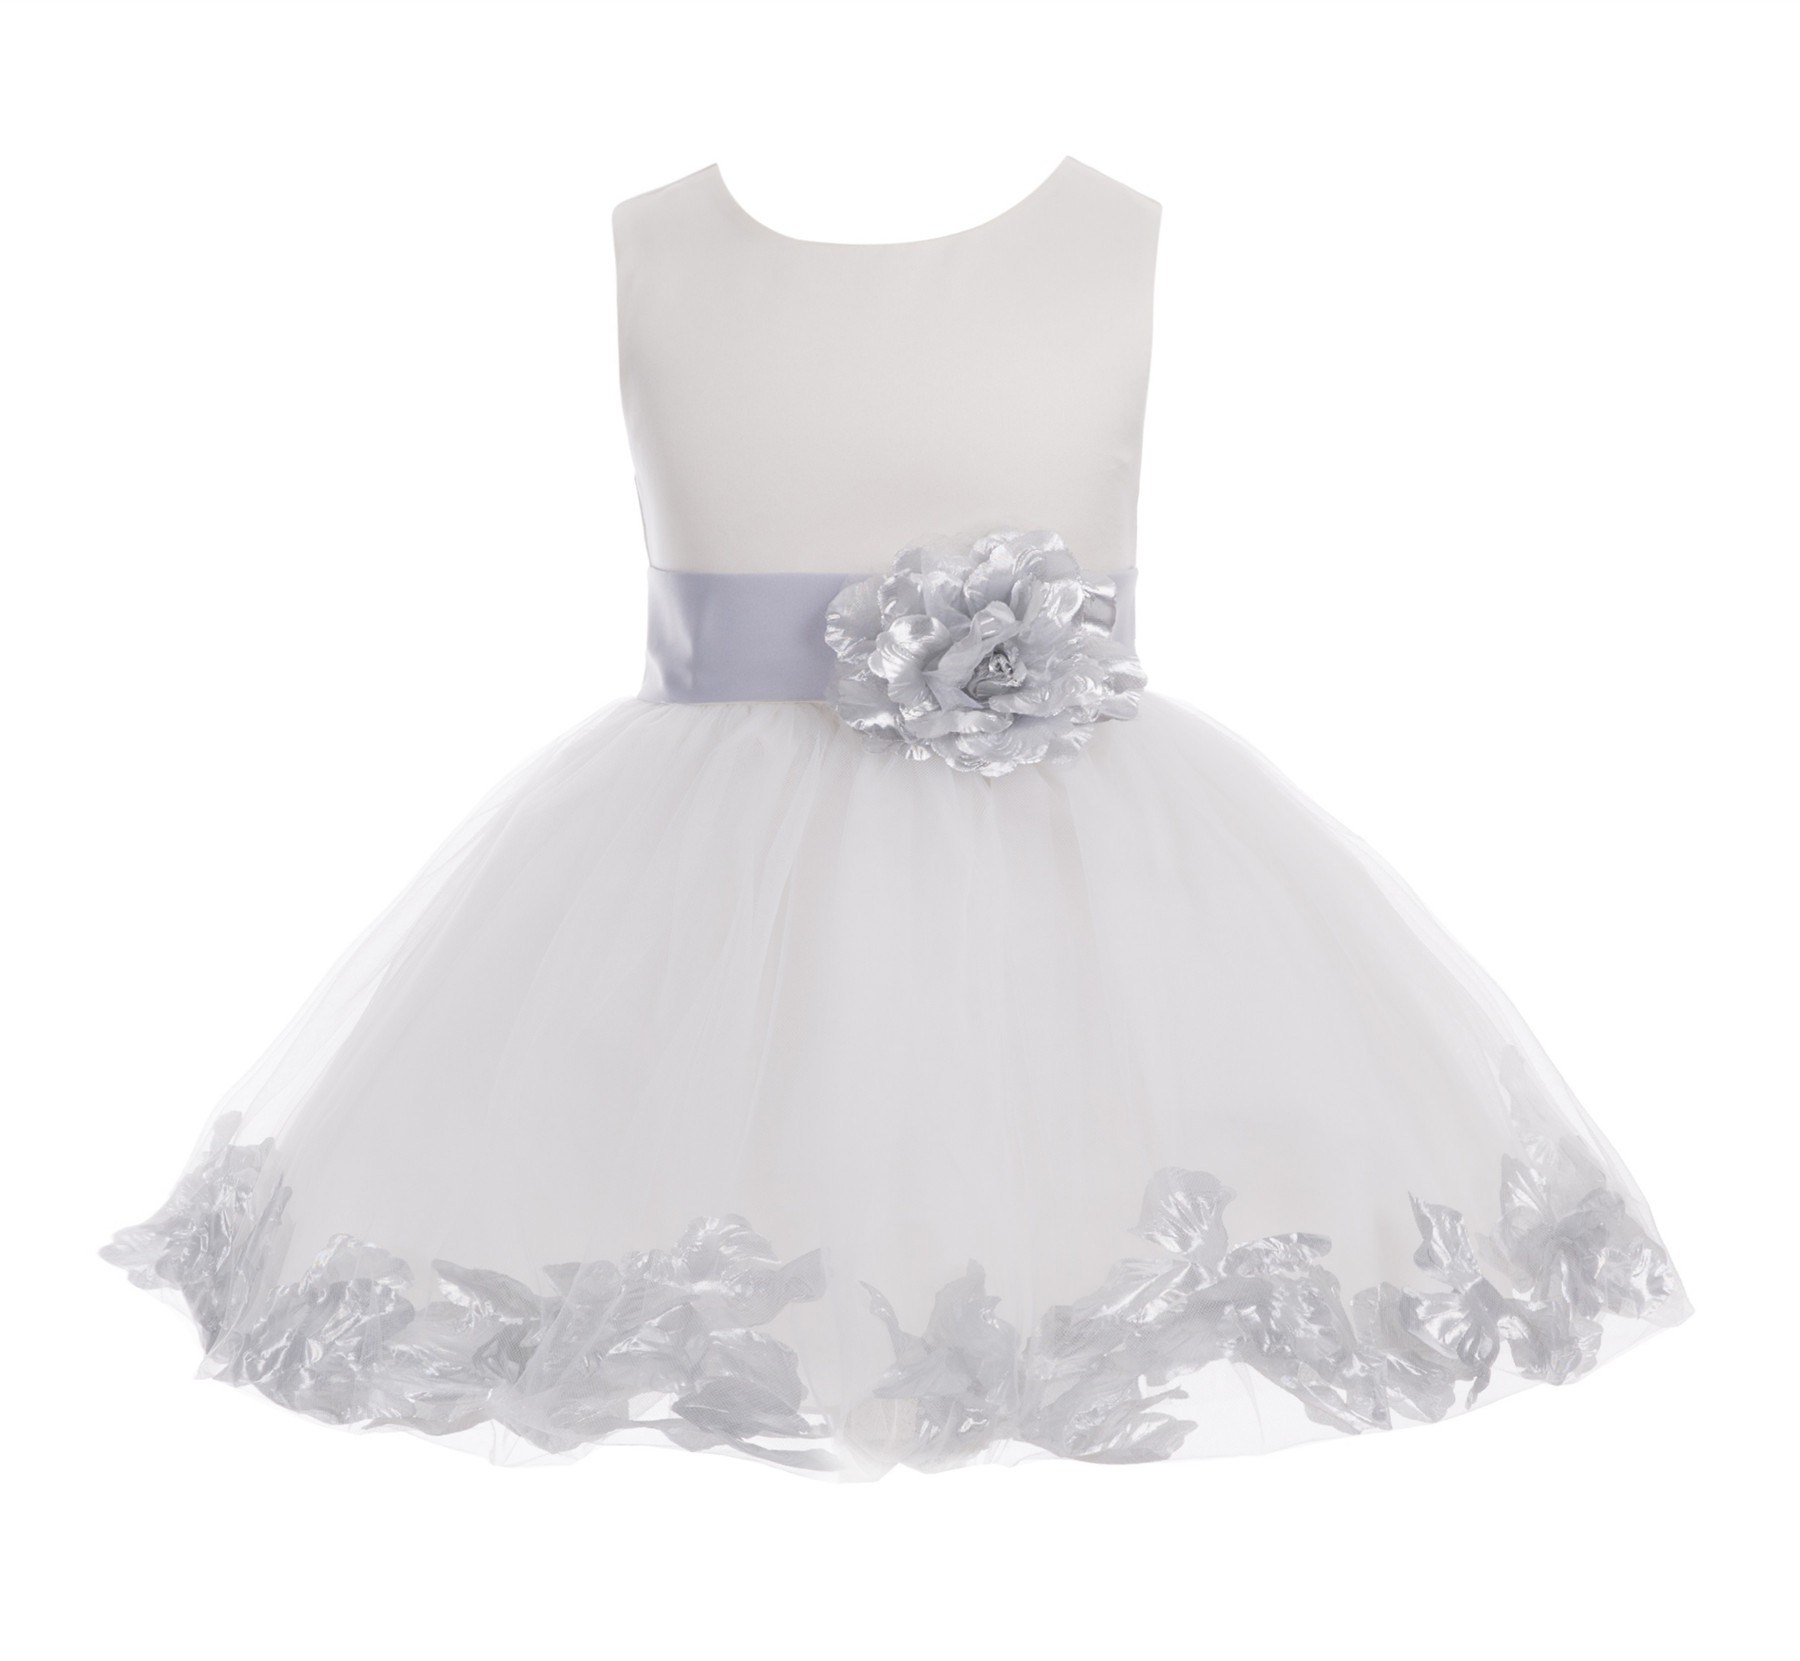 Ivory/Silver Tulle Rose Petals Knee Length Flower Girl Dress 306S